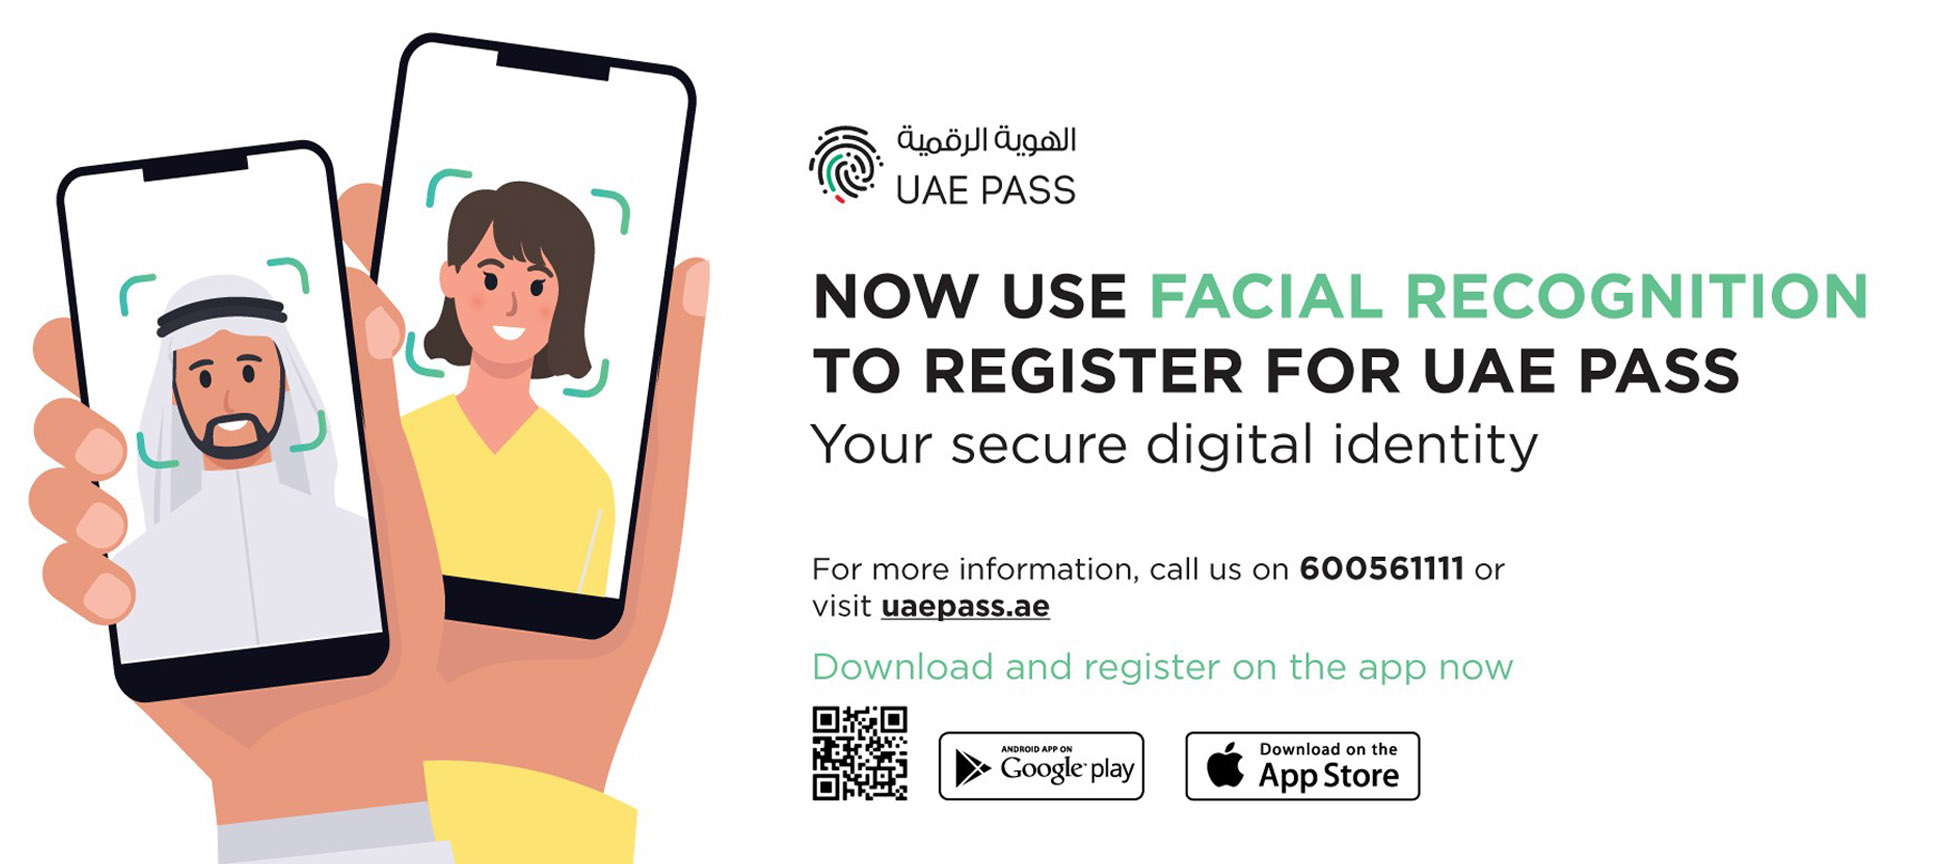 Uae Pass Facial Recognition